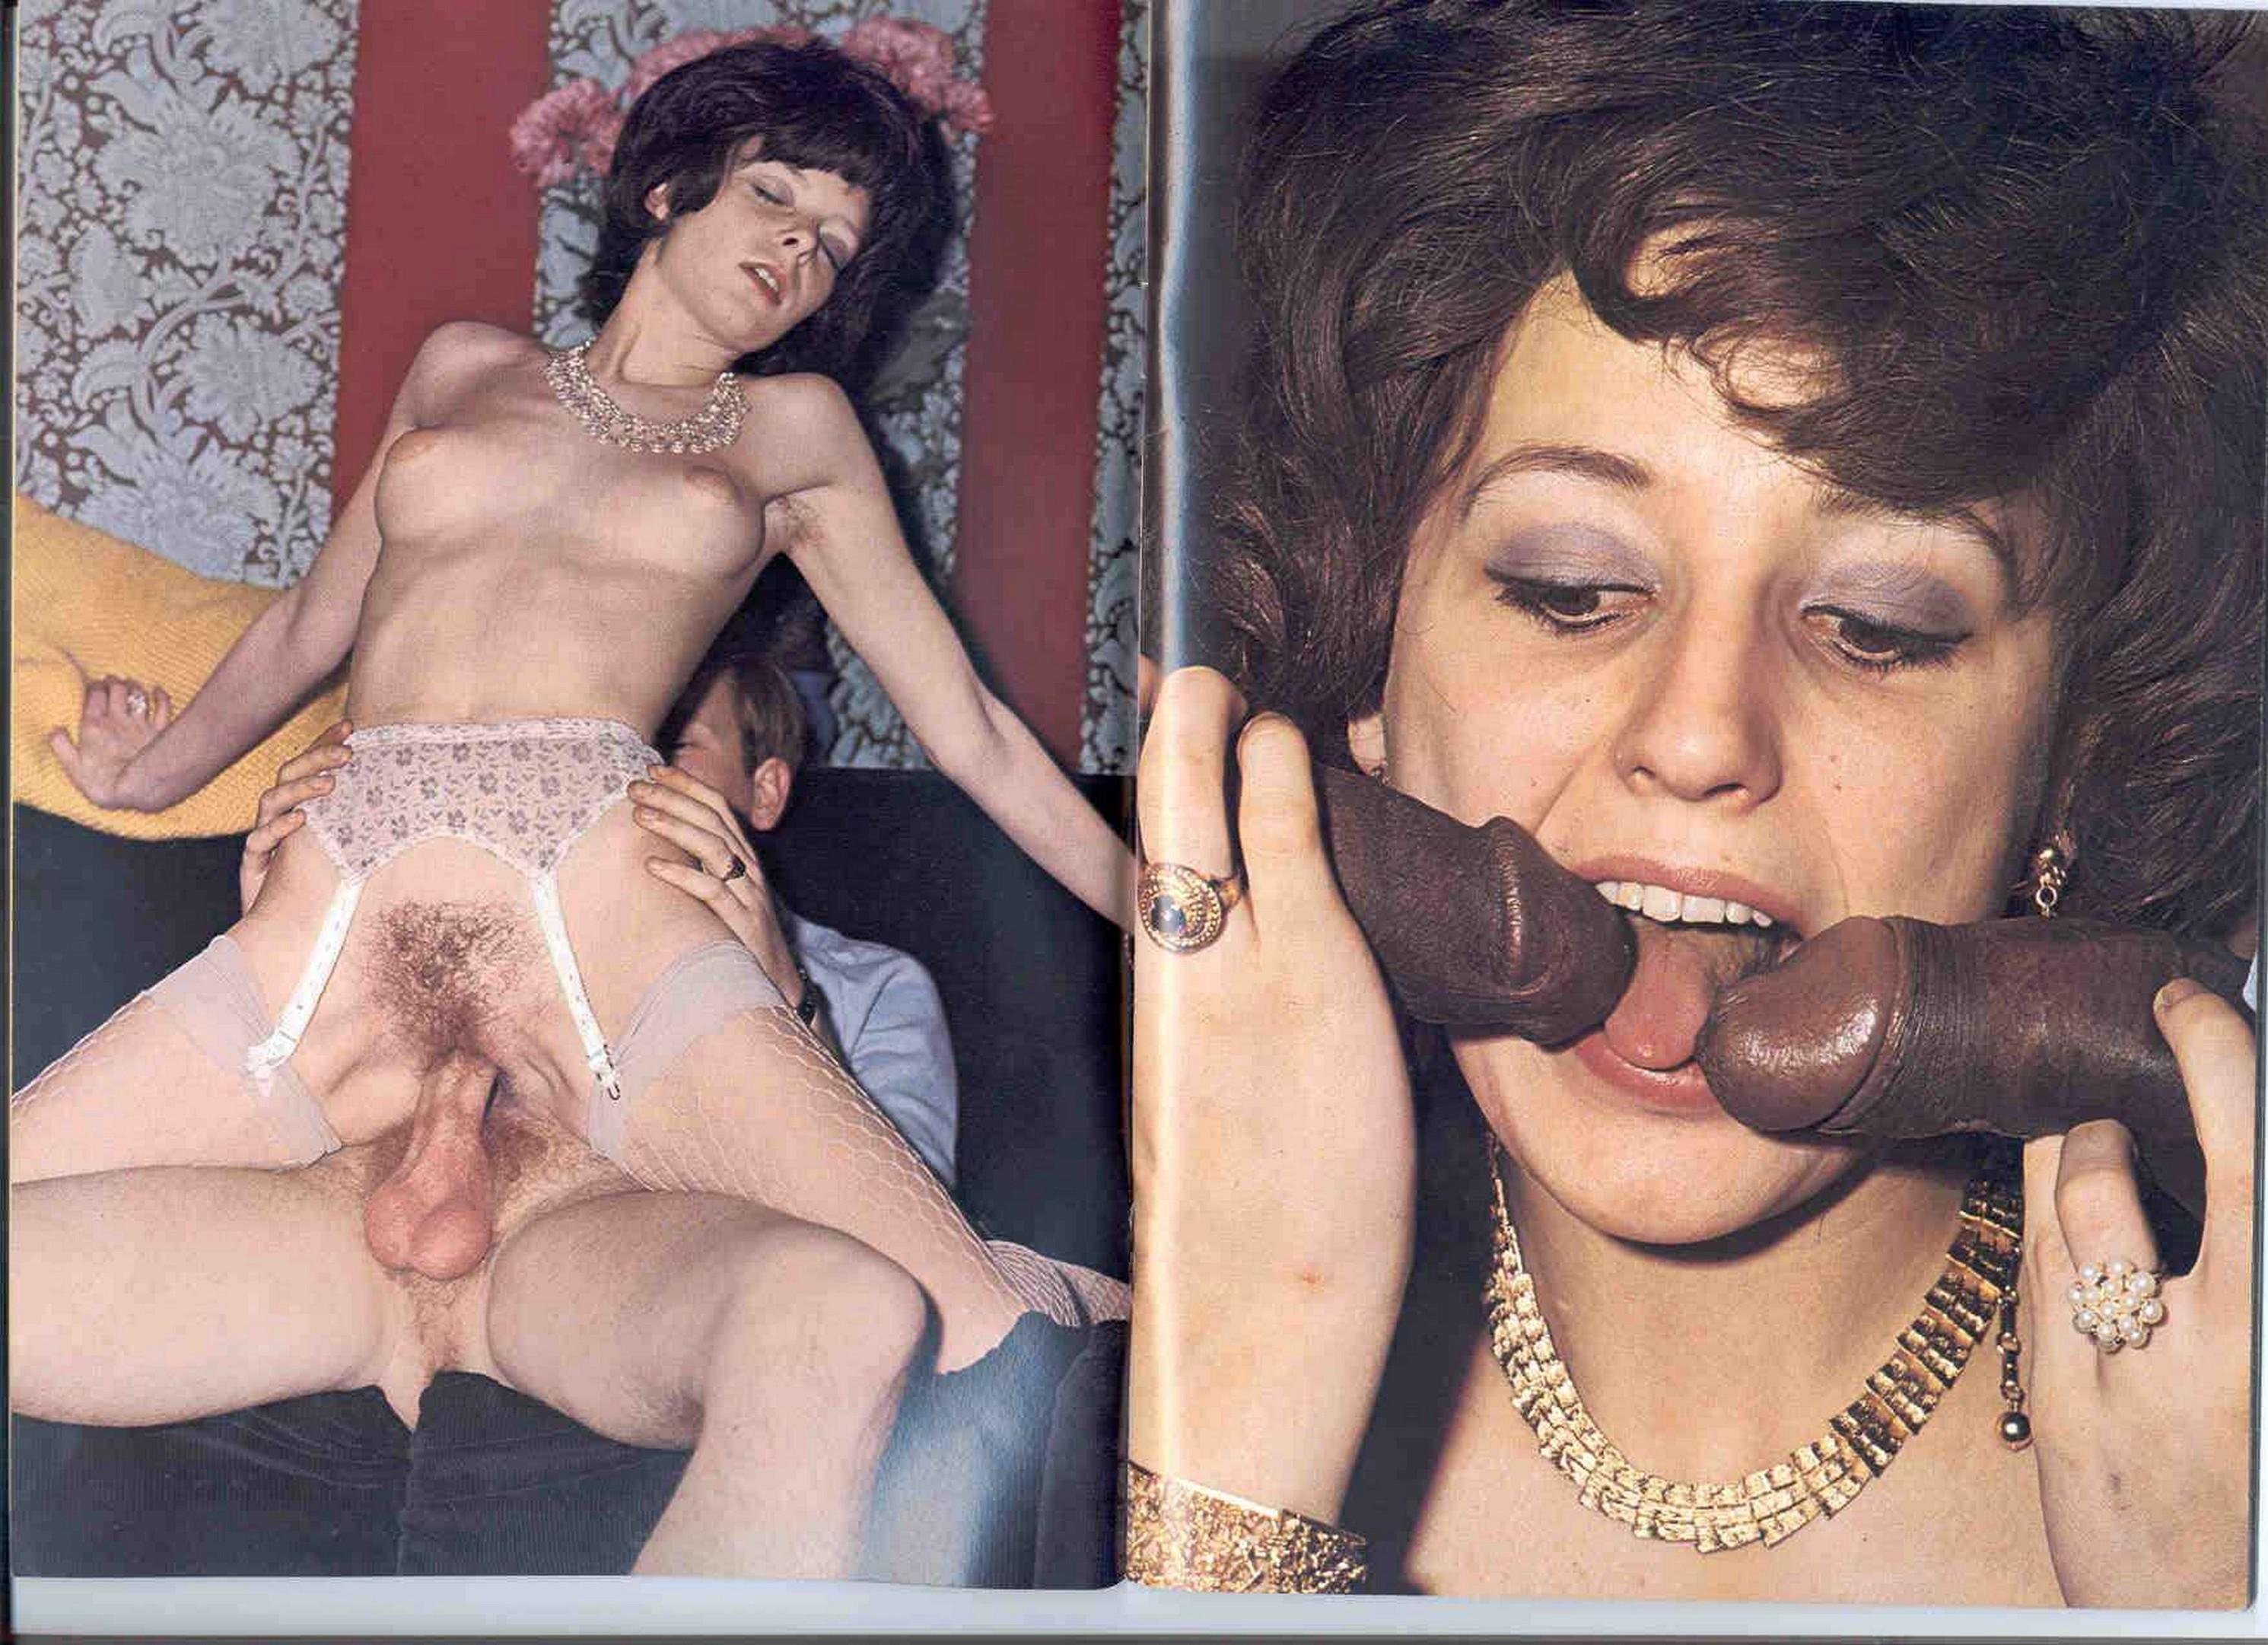 Pnnsex - British 70s Porn Magazine | Sex Pictures Pass